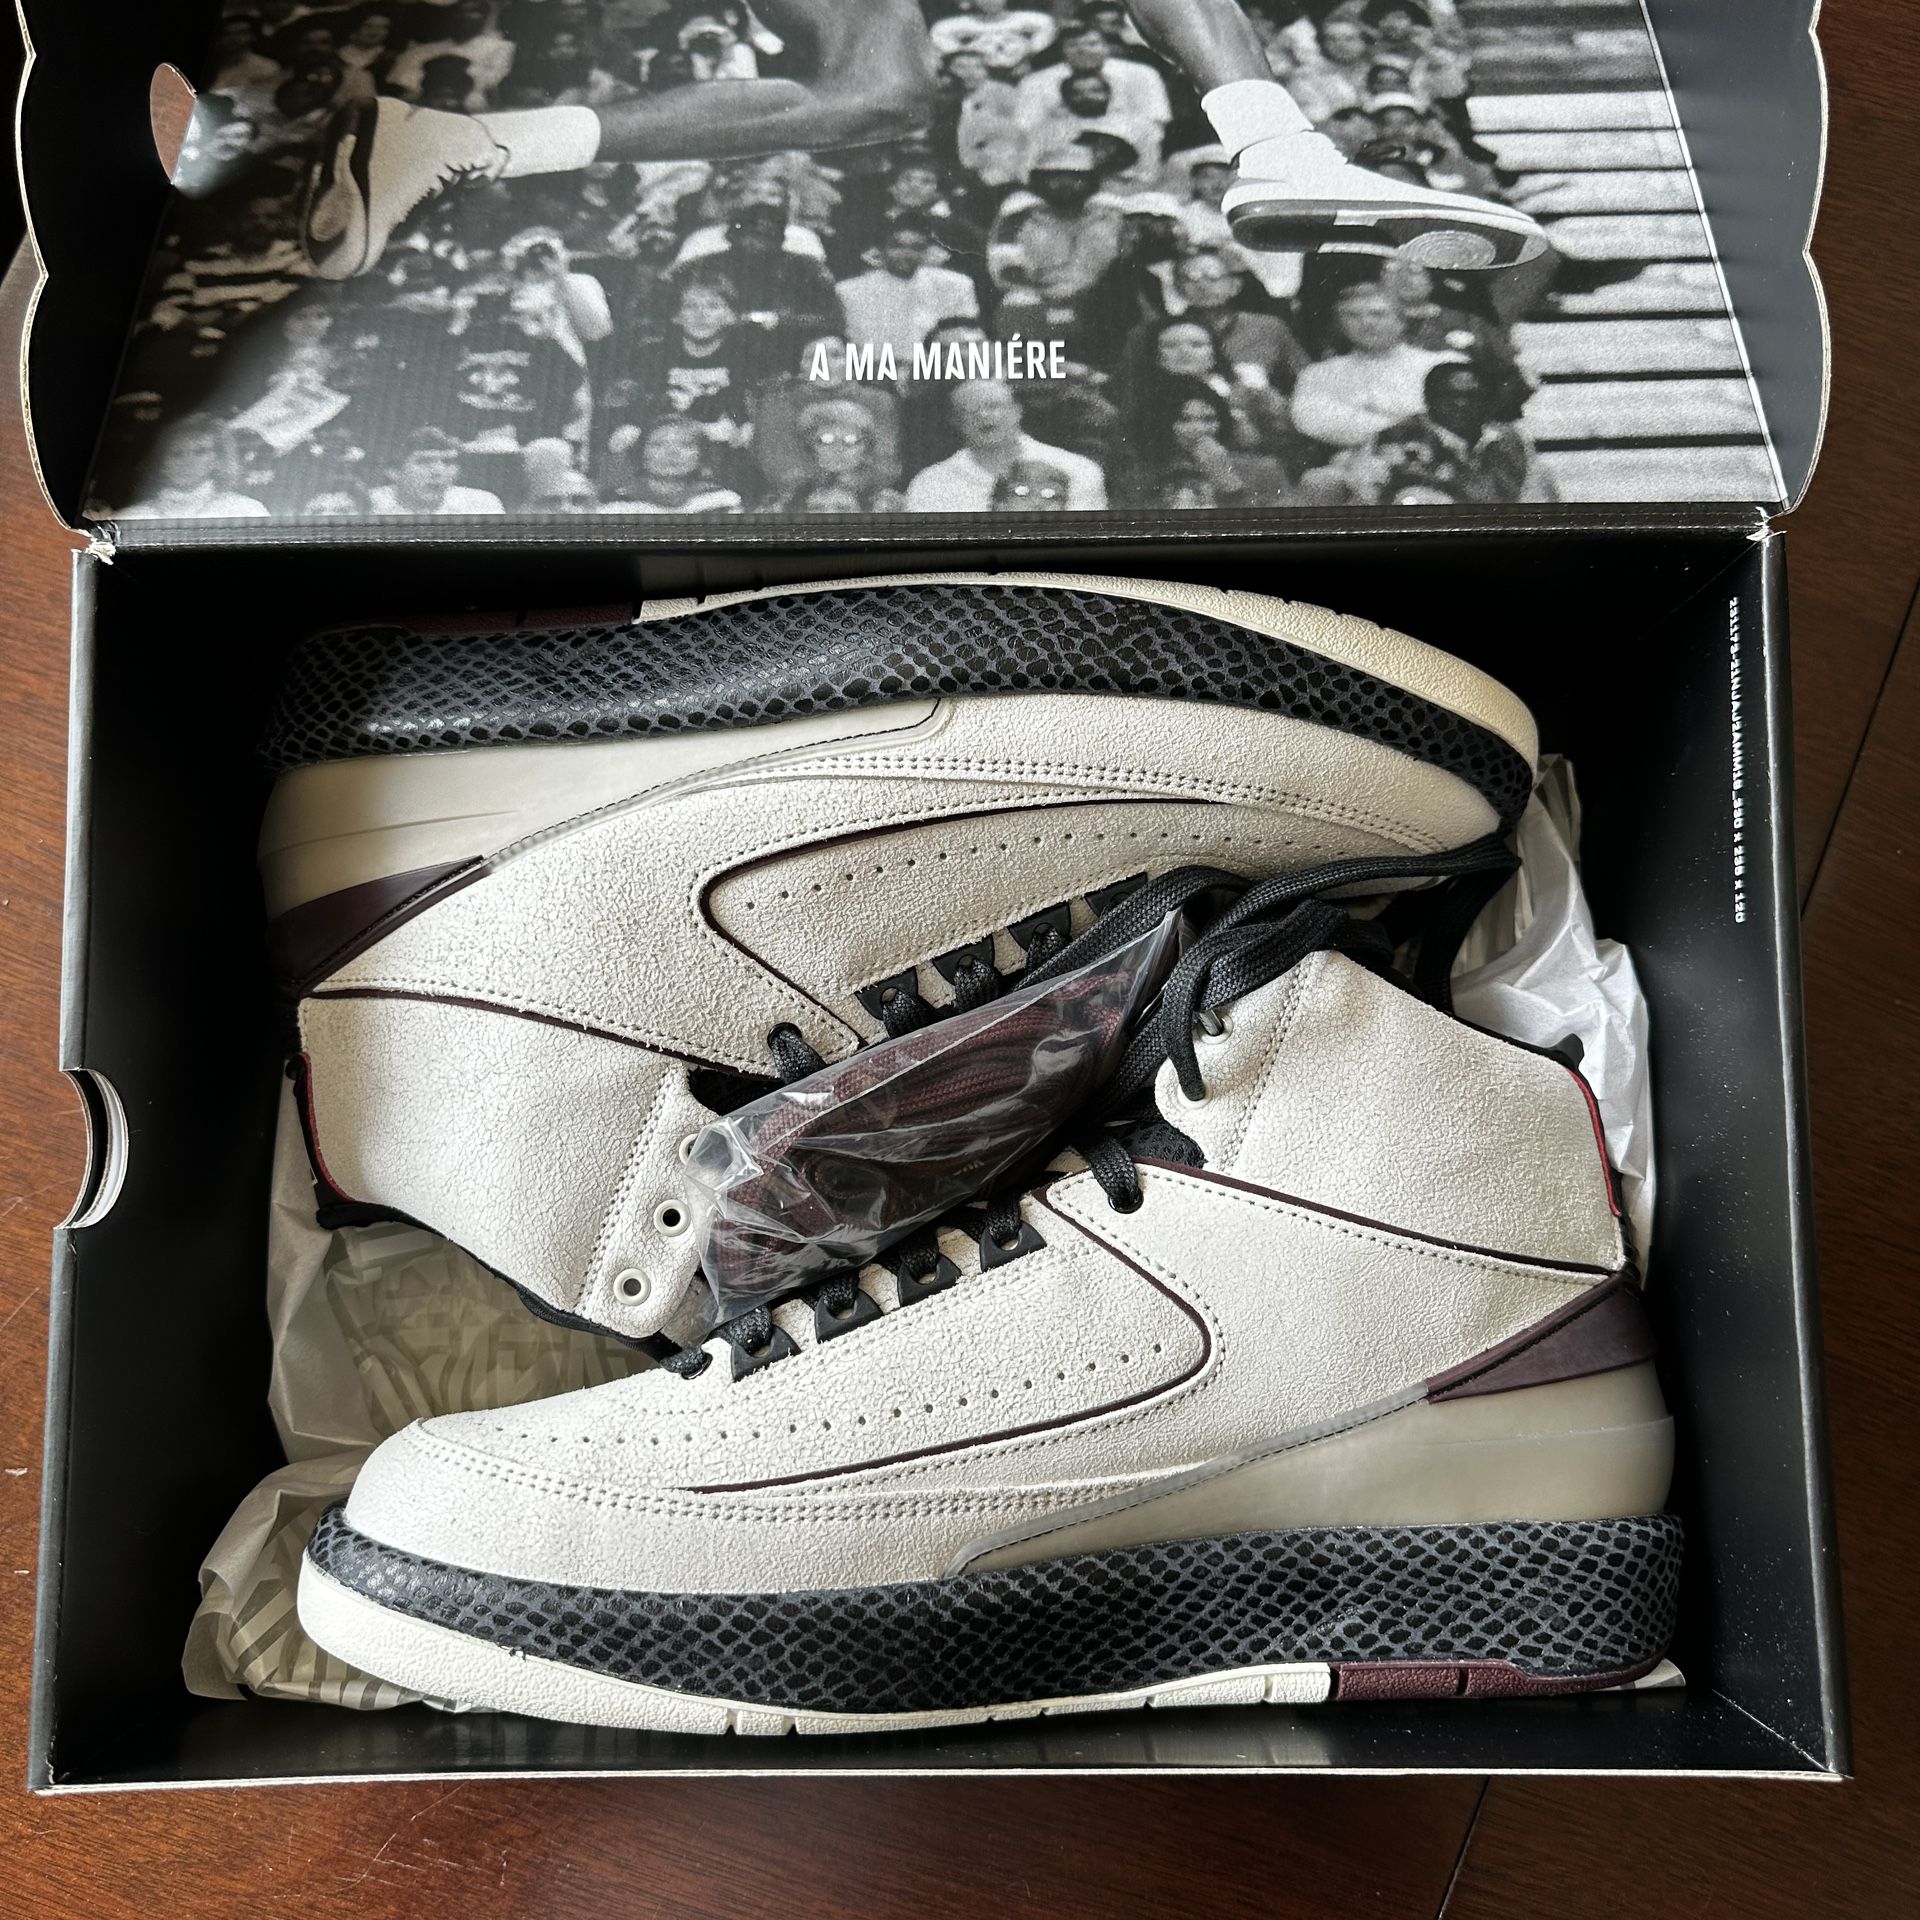 Air Jordan 2 A Ma Maniere Sneakers for Sale in Smyrna, TN   OfferUp